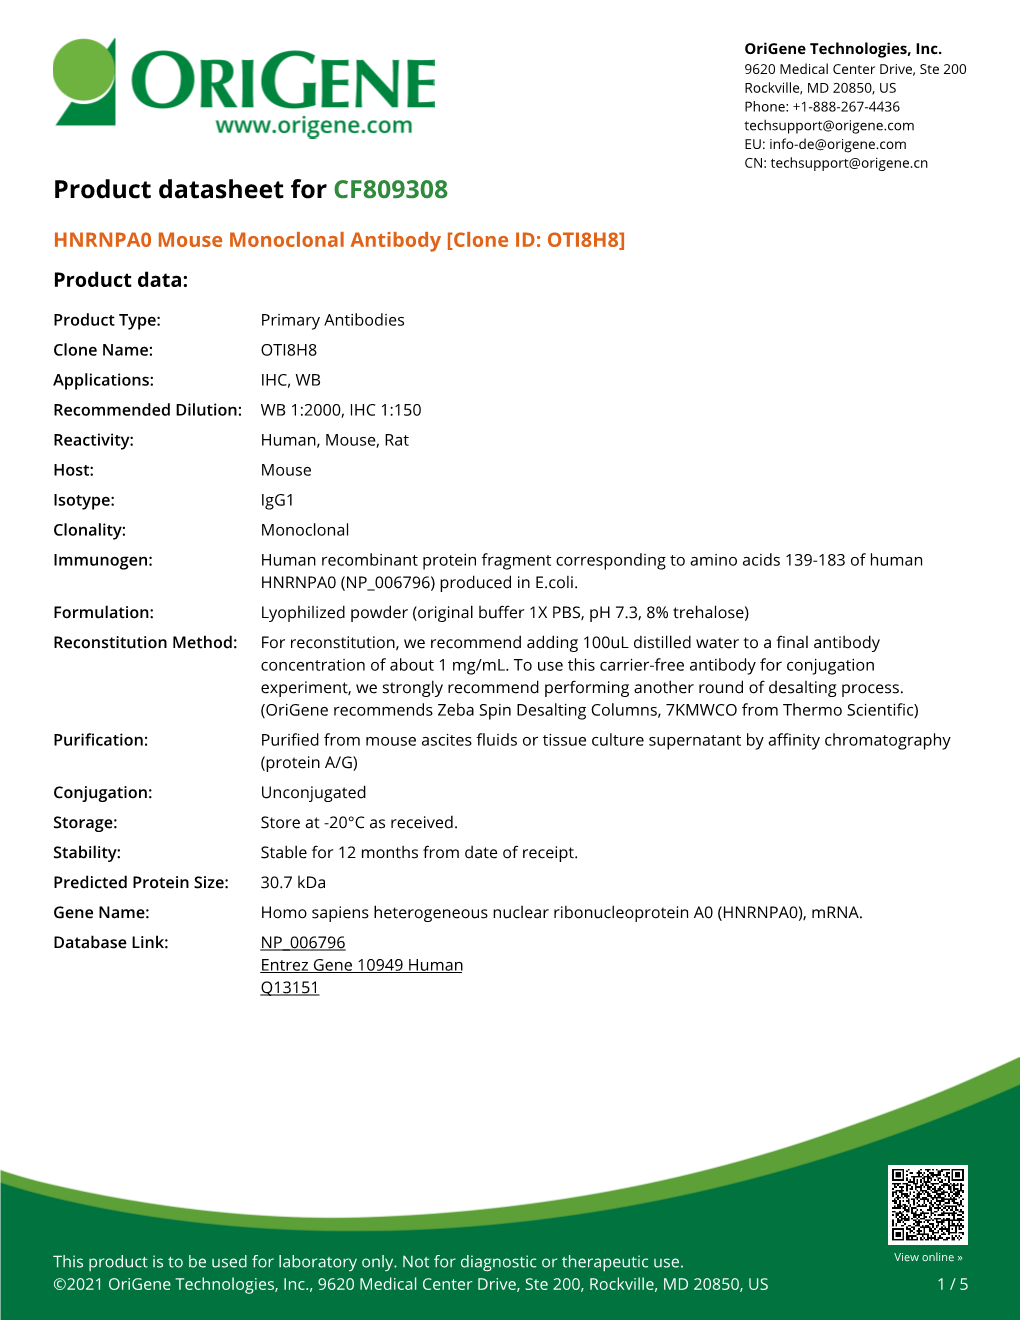 HNRNPA0 Mouse Monoclonal Antibody [Clone ID: OTI8H8] Product Data